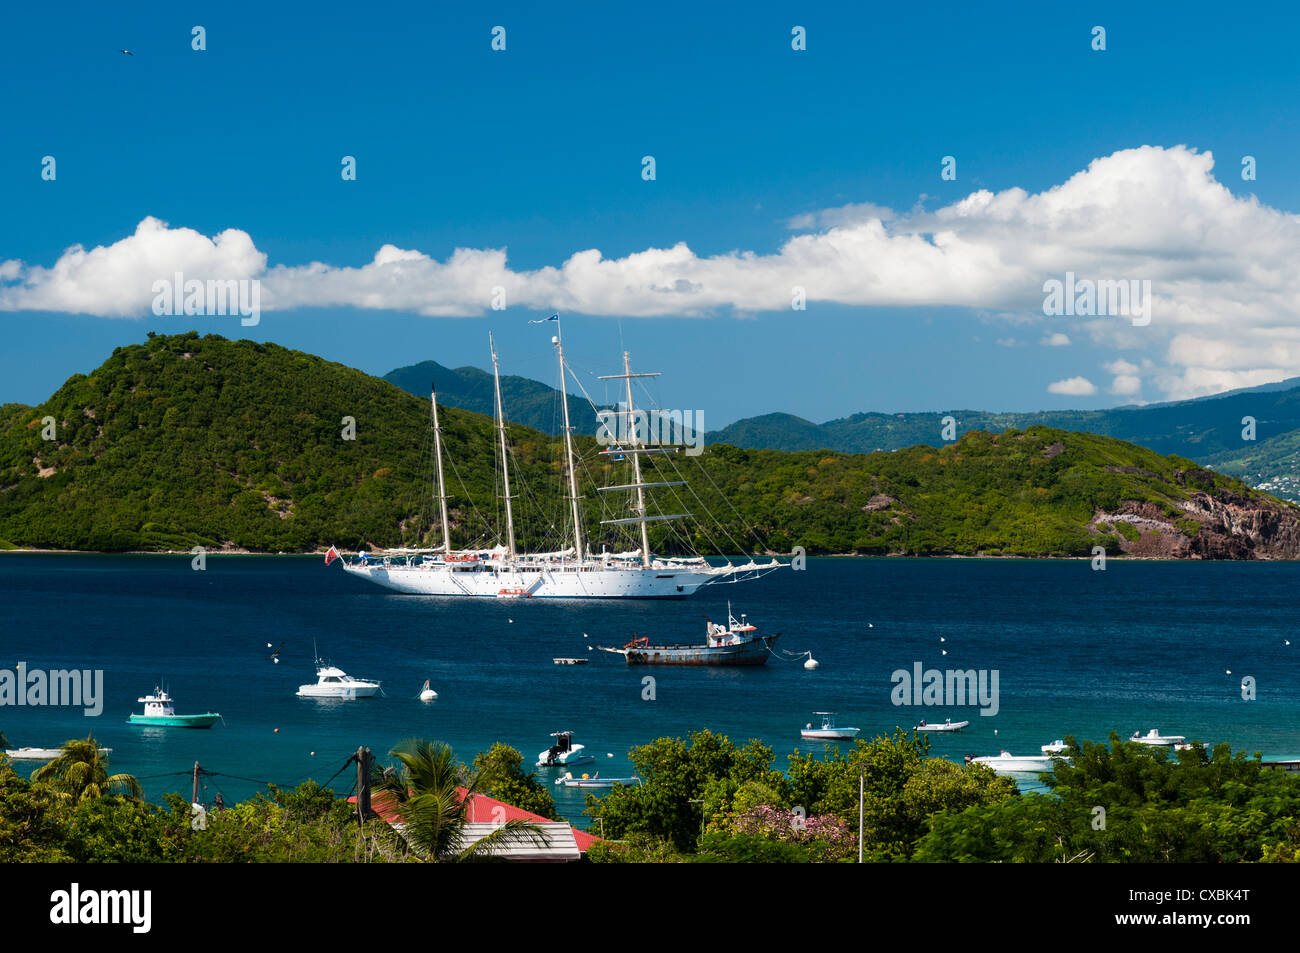 Star Clipper vela barco cruse, Le Bourg, Iles des Saintes, Terre de Haut, Guadalupe, Indias Occidentales, el Caribe francés, Francia Foto de stock